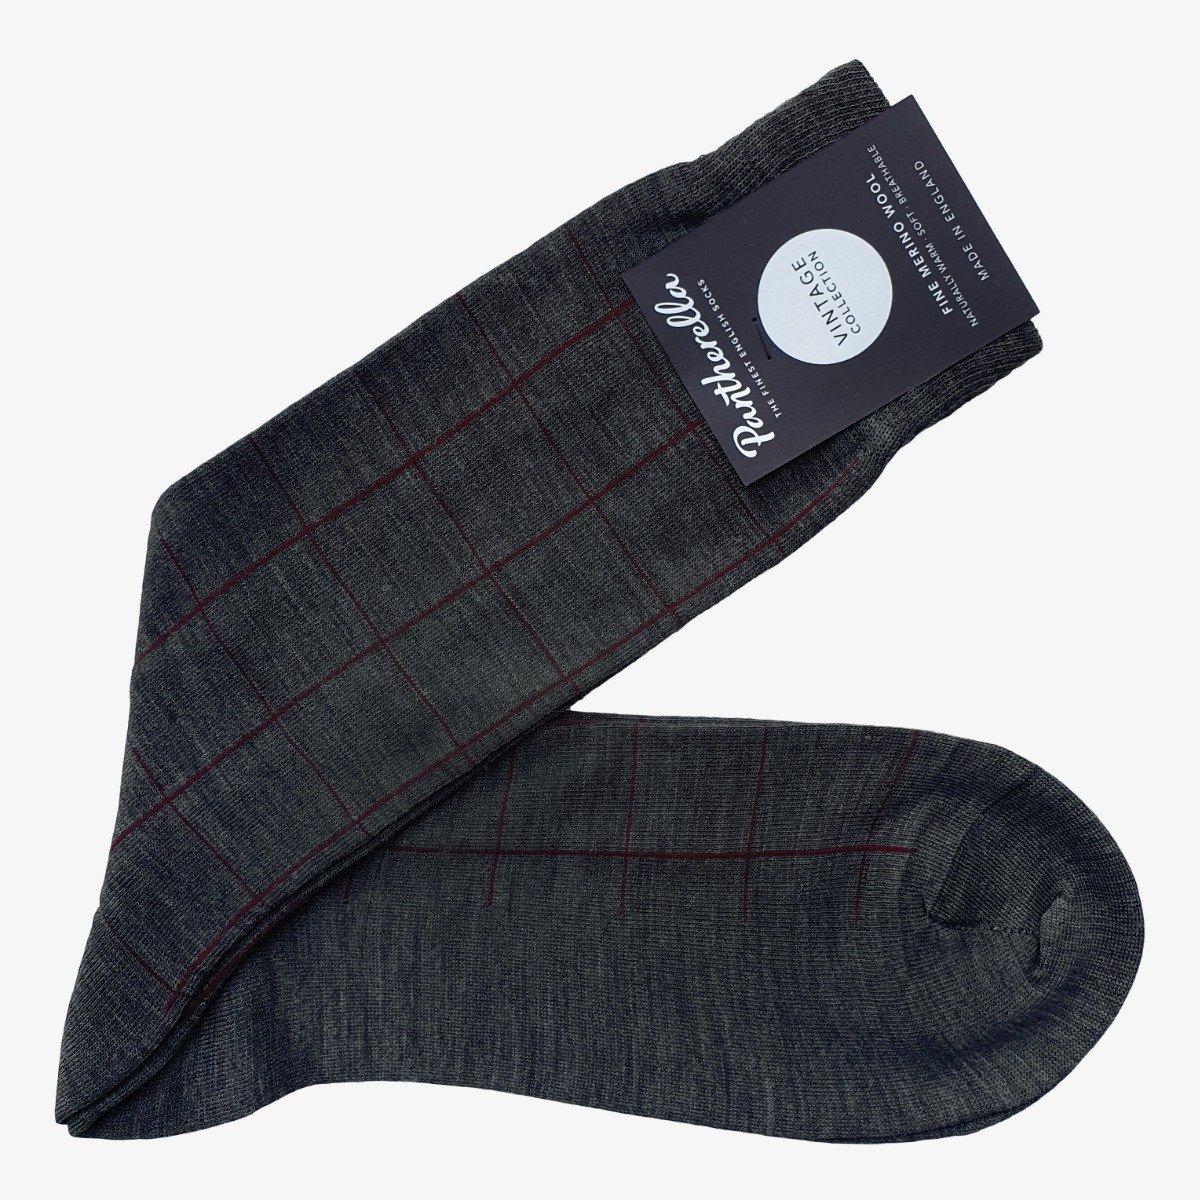 Pantherella Westleigh dark grey windowpane merino wool mid-calf socks